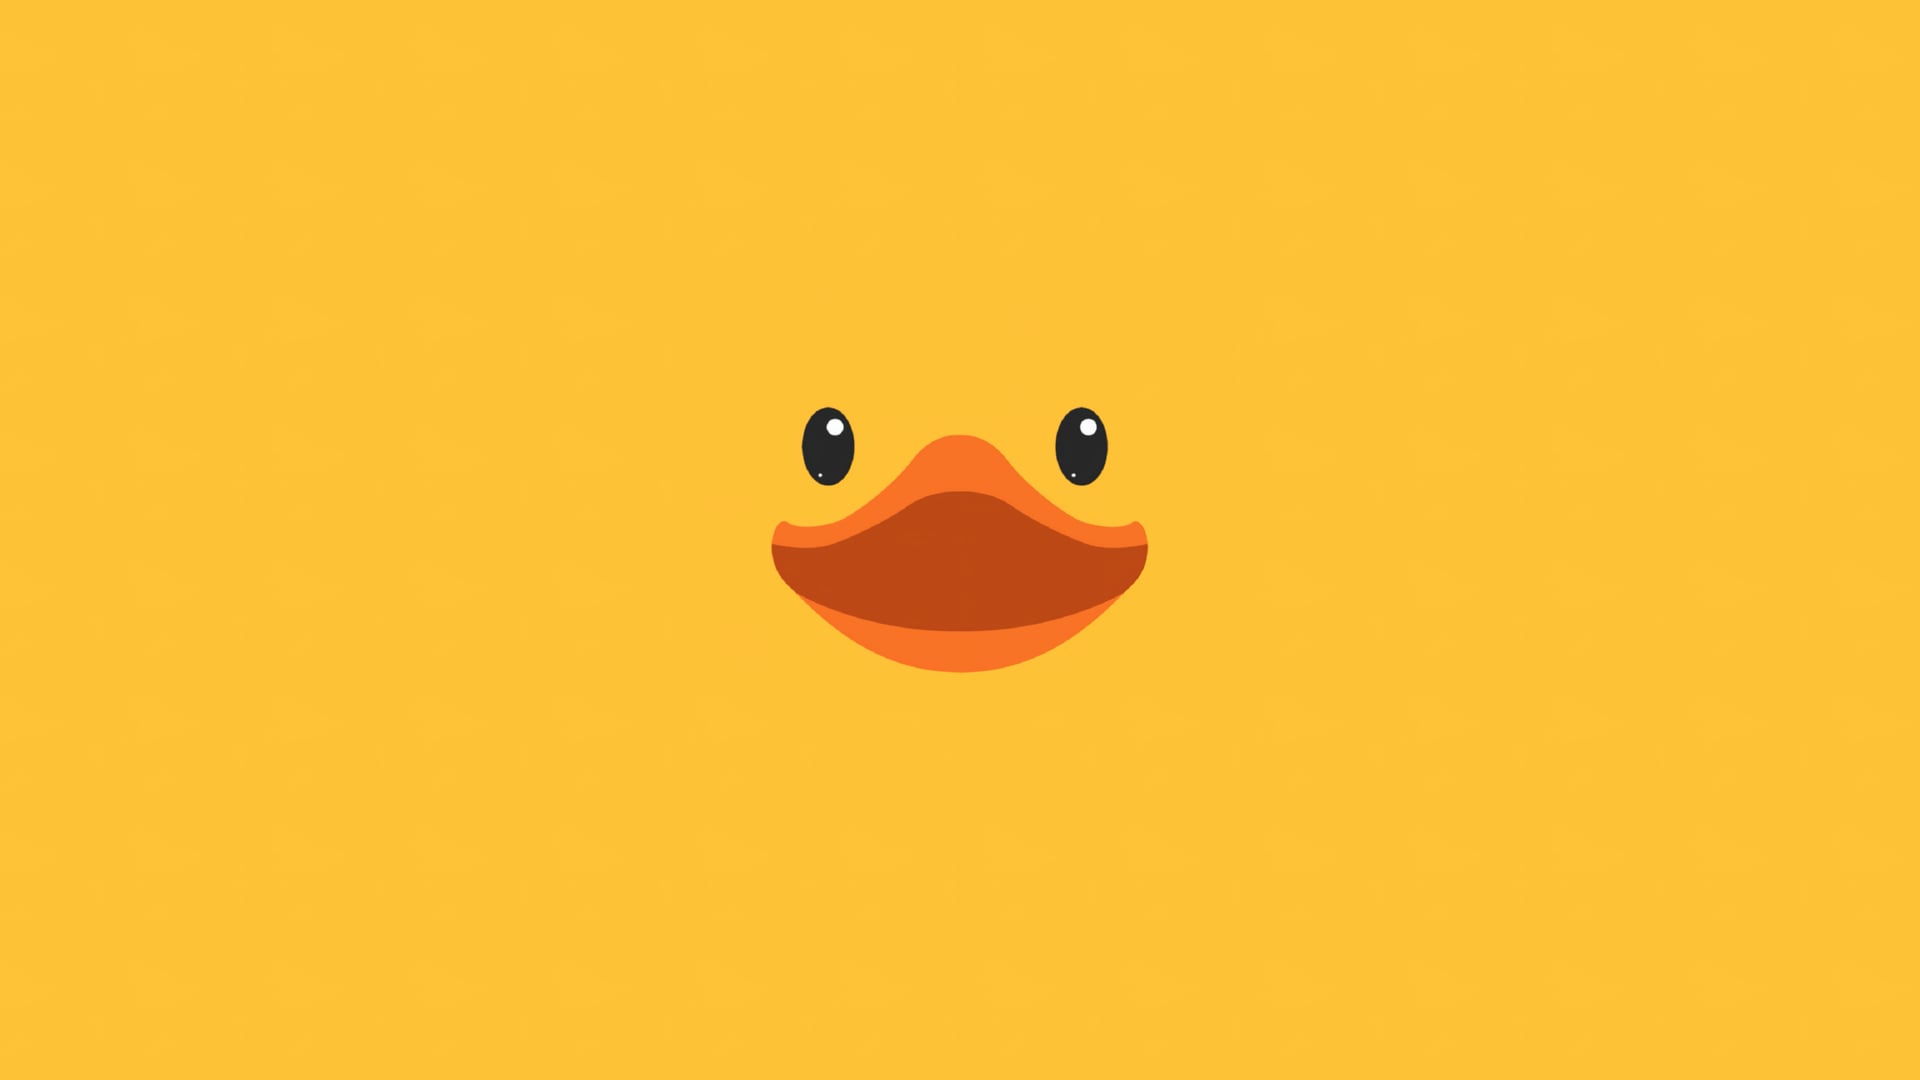 Digital Art Cute duck at 2048 x 2048 iPad size wallpapers HD quality